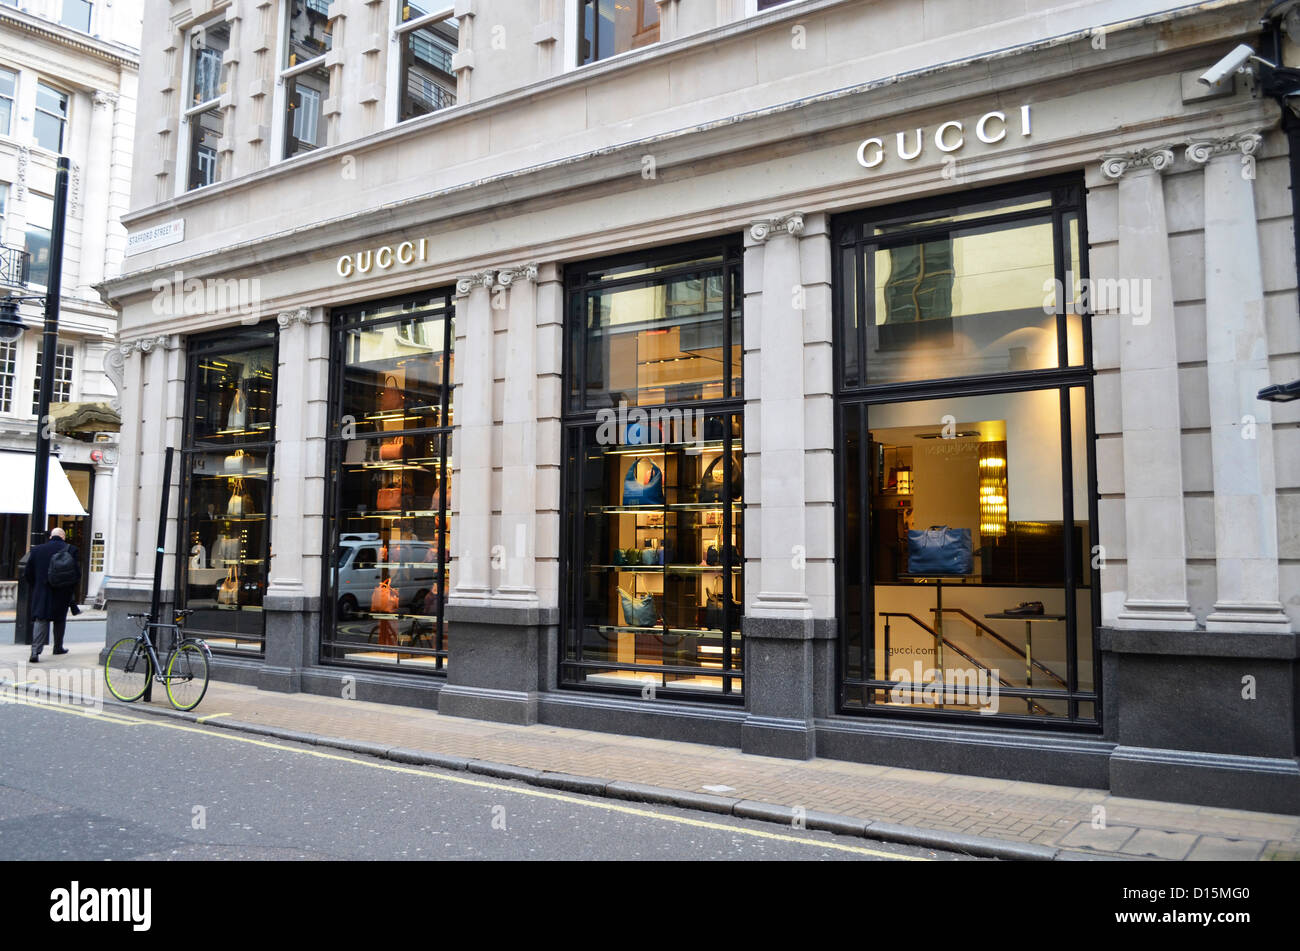 Gucci Store in London, Mayfair Stockfotografie - Alamy